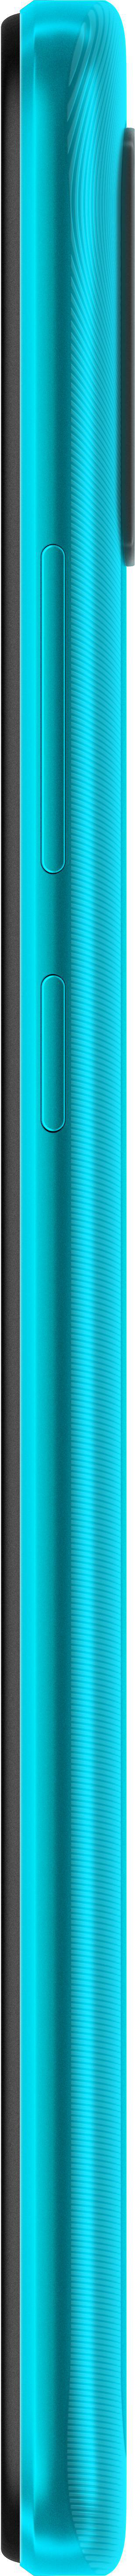 9A Peacock GB XIAOMI Green Dual SIM 32 REDMI